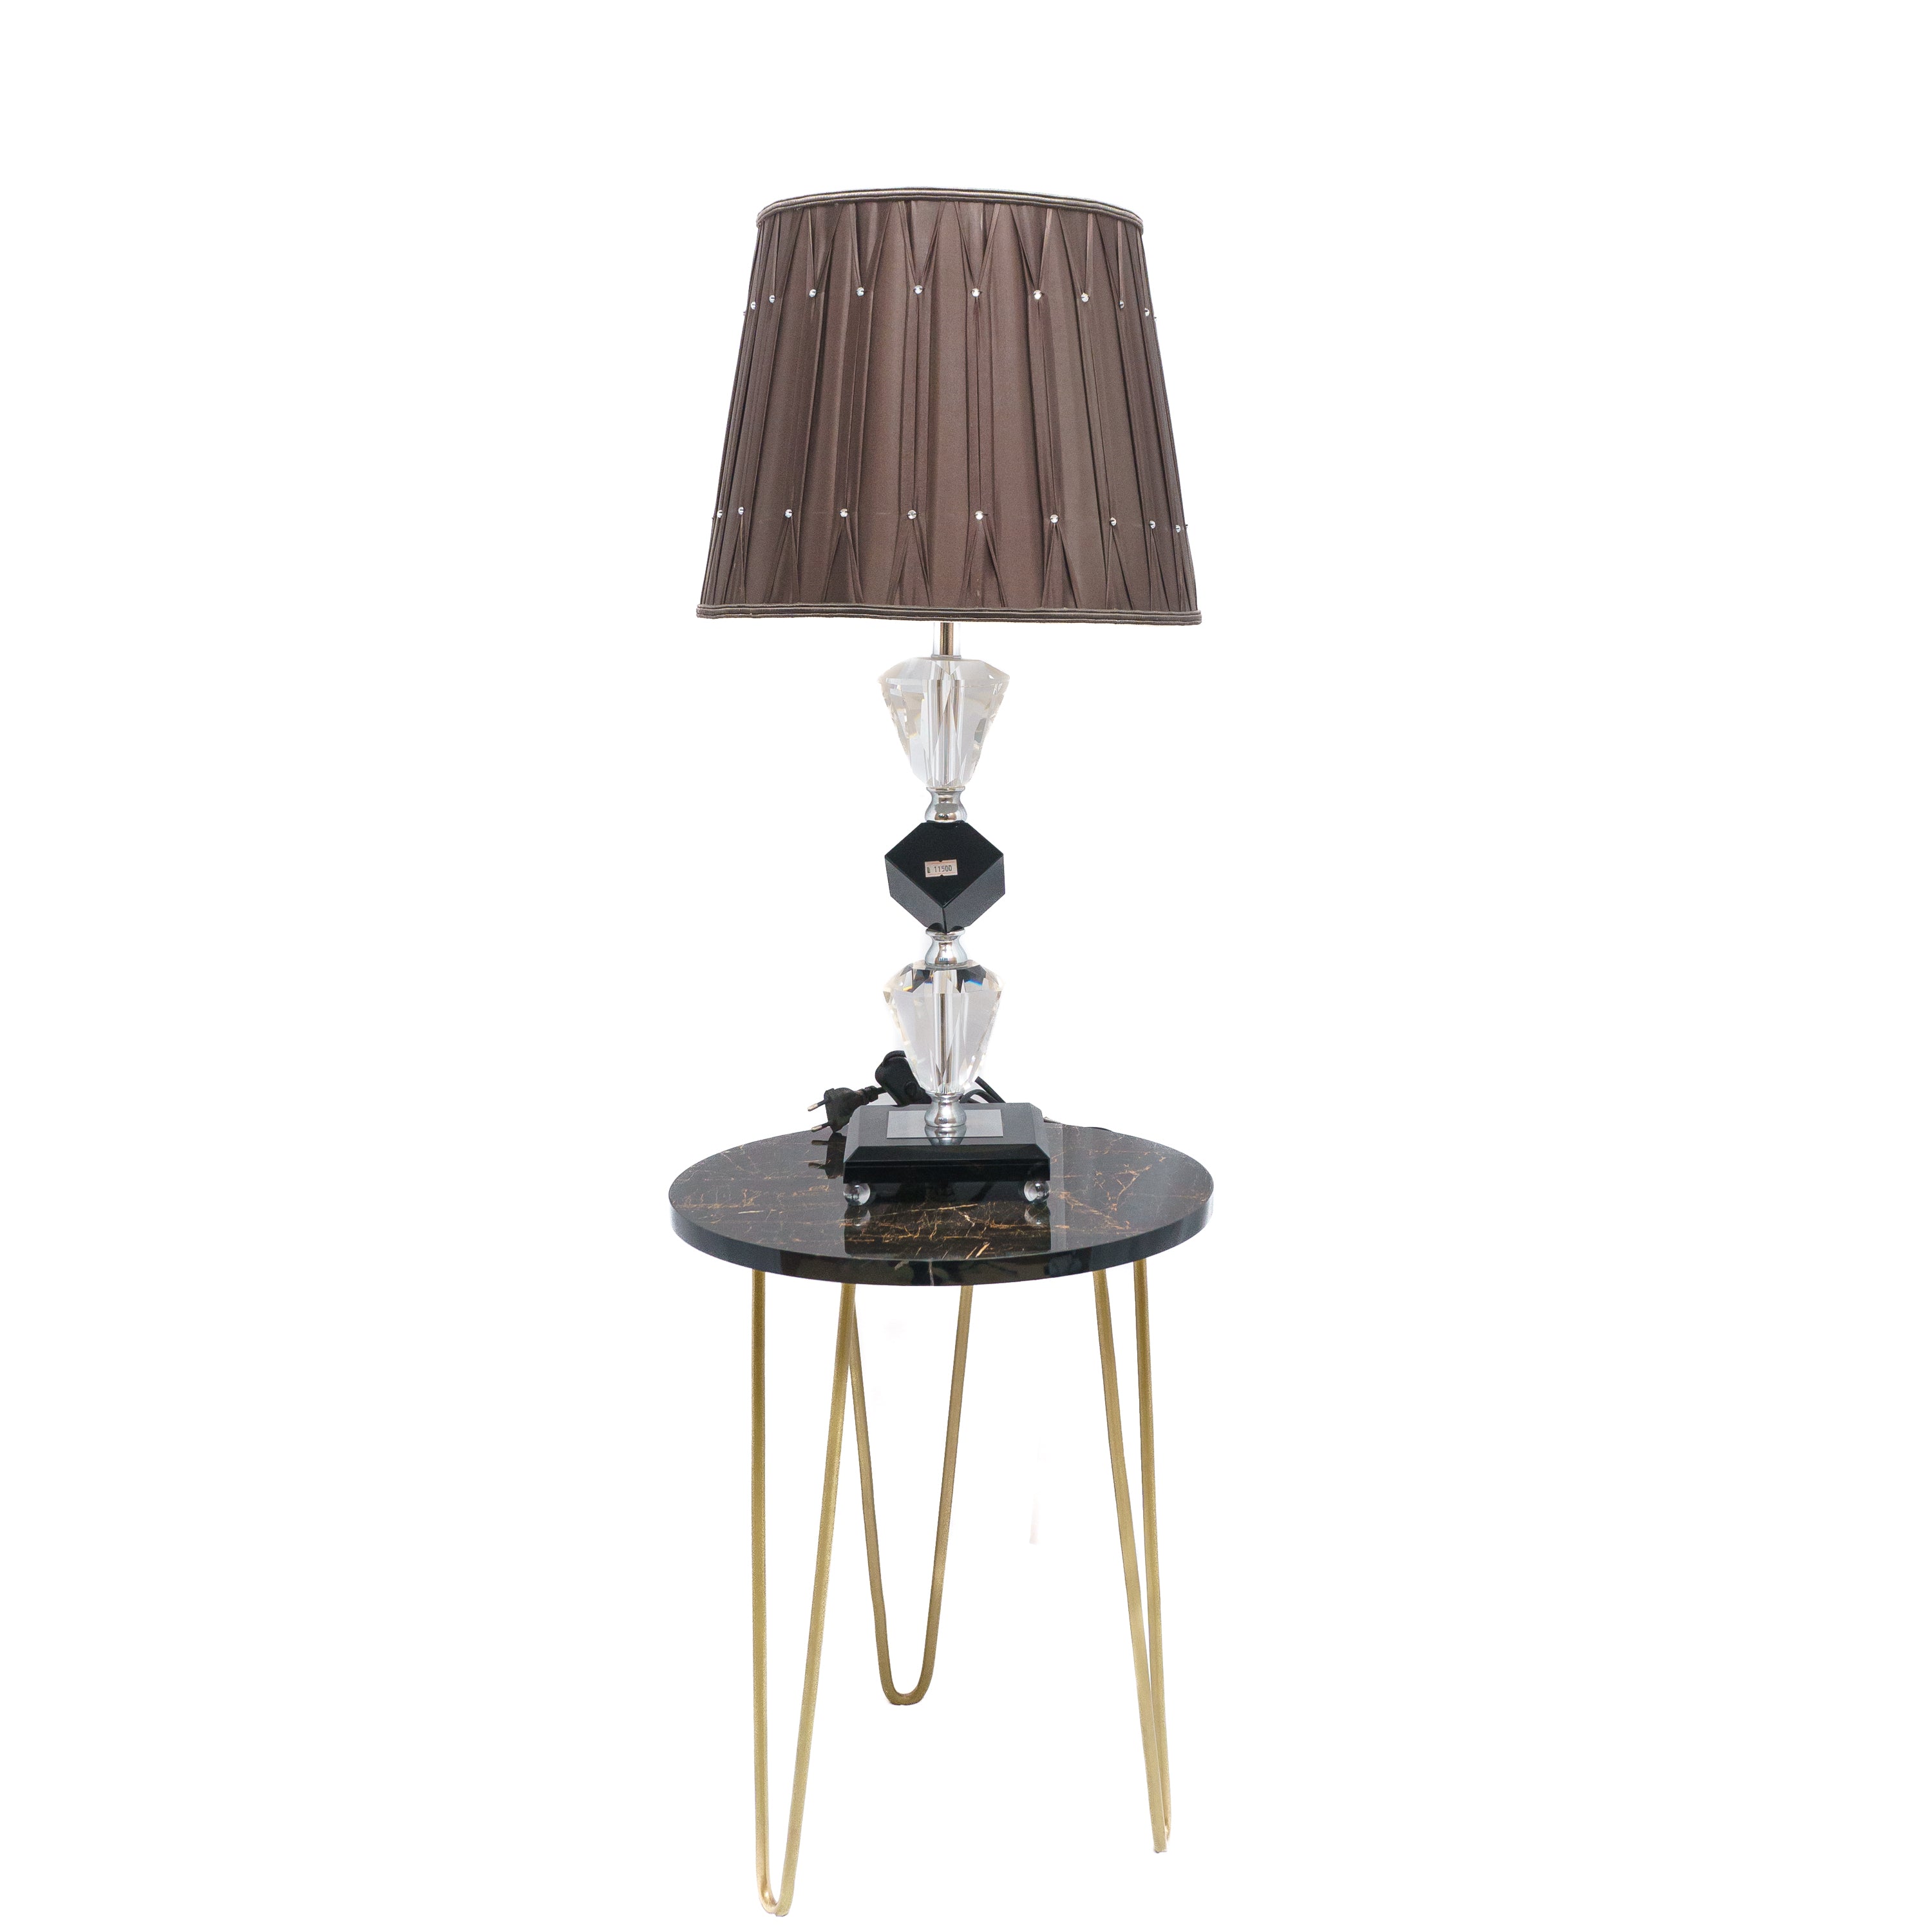 Sleek and Stylish Table Lamp: The Epitome of Elegance